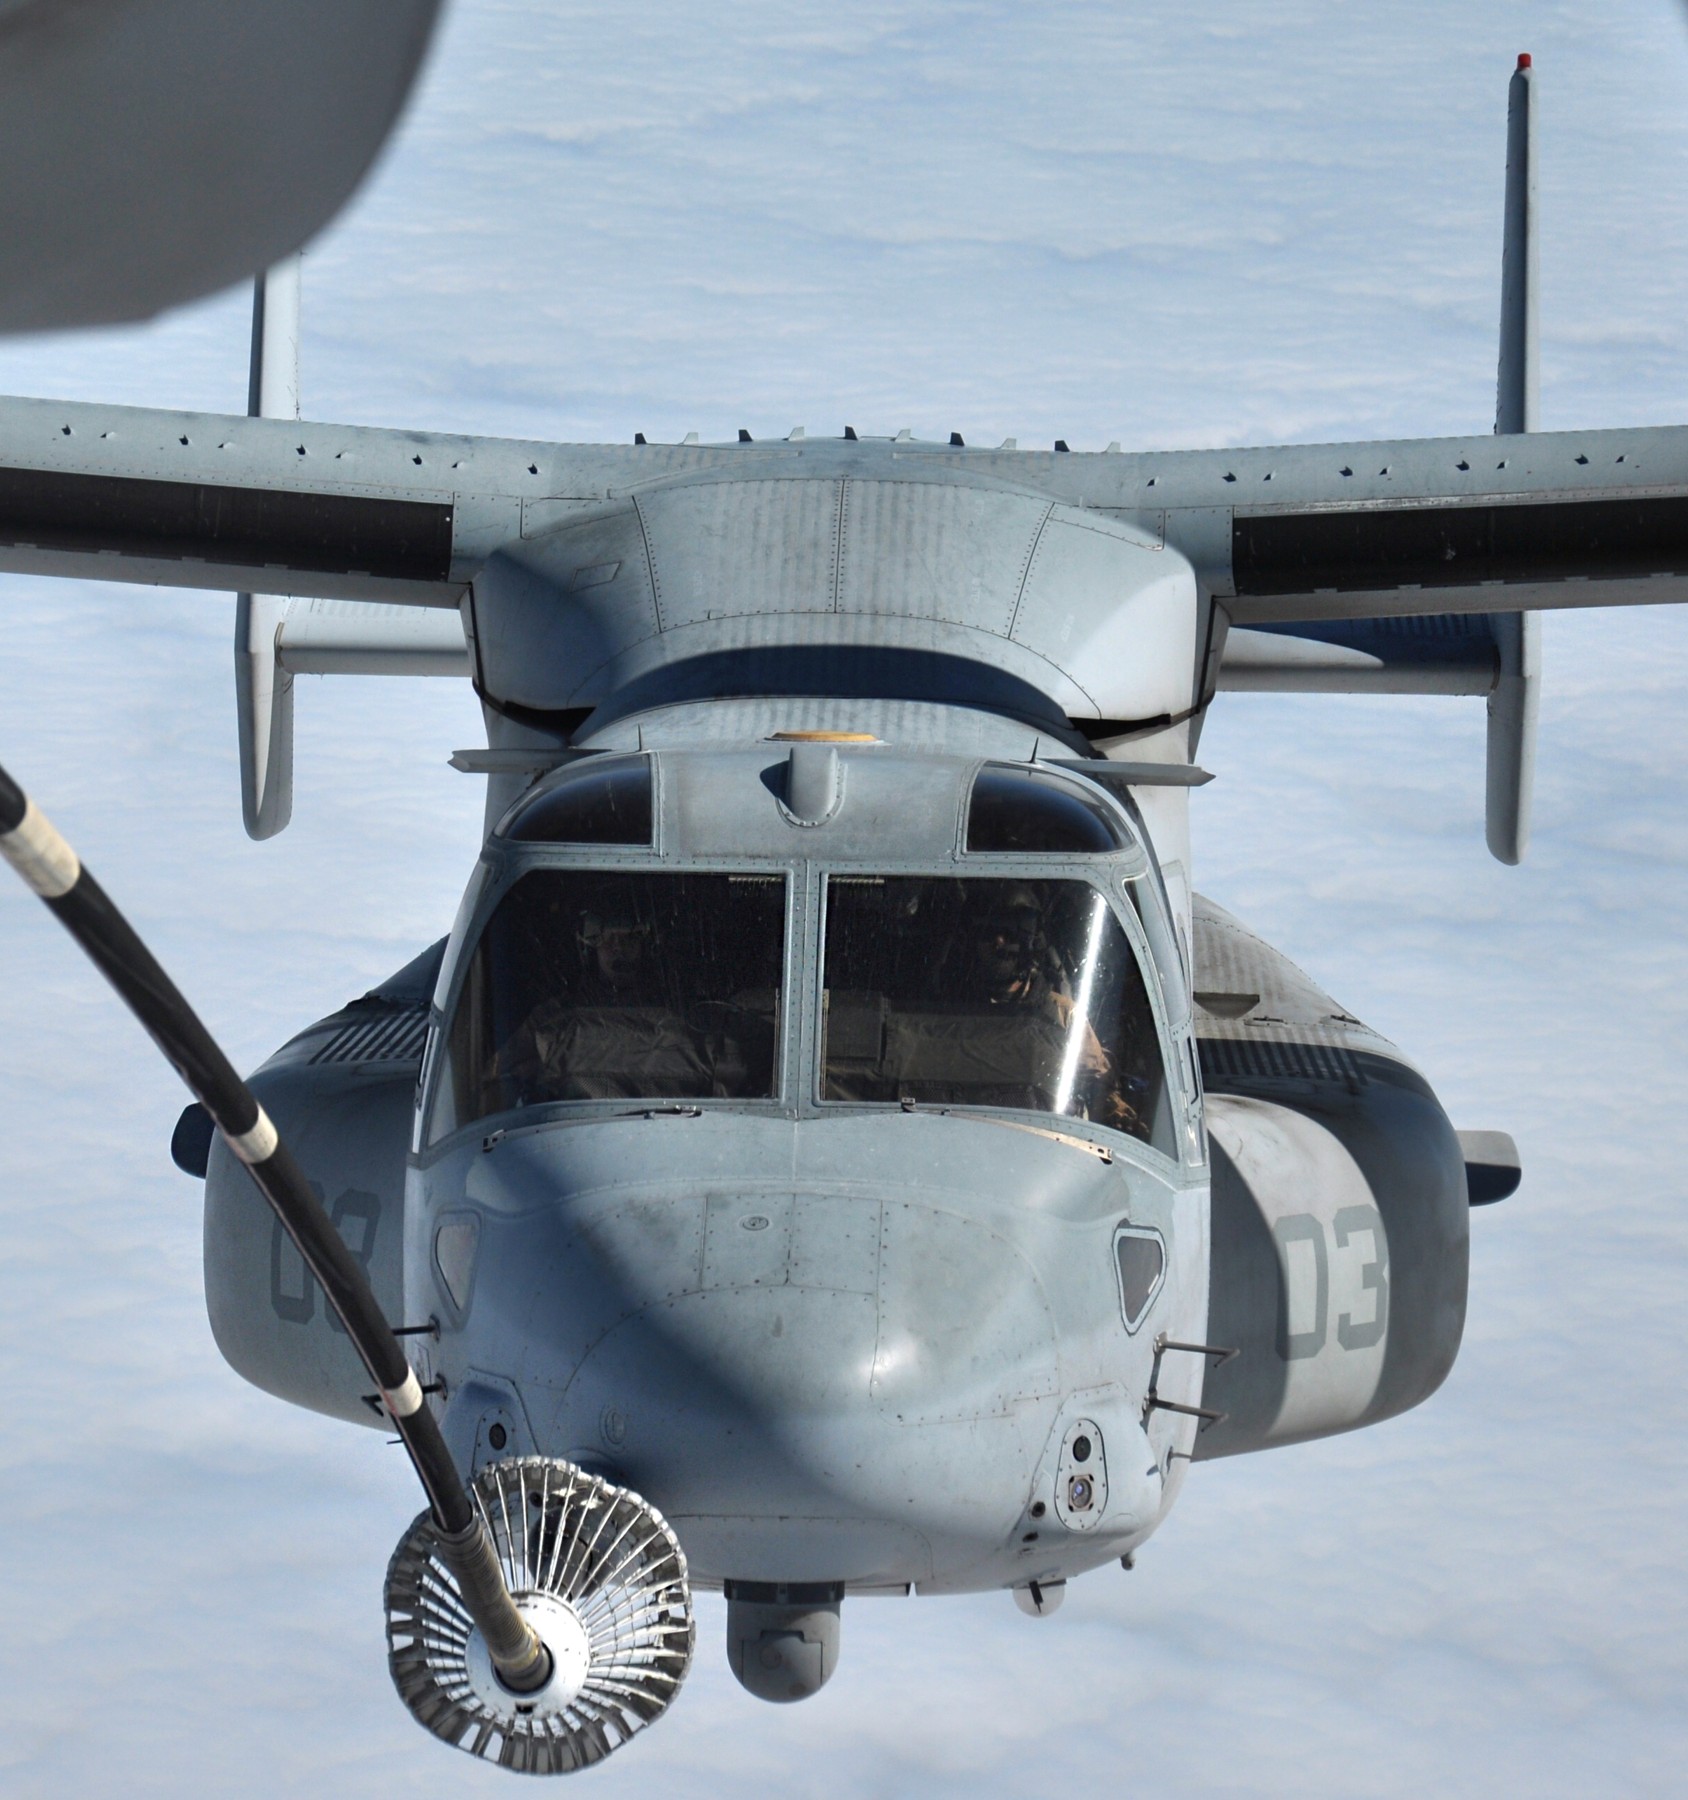 vmm-165 white knights mv-22b osprey inflight refueling 2014 06